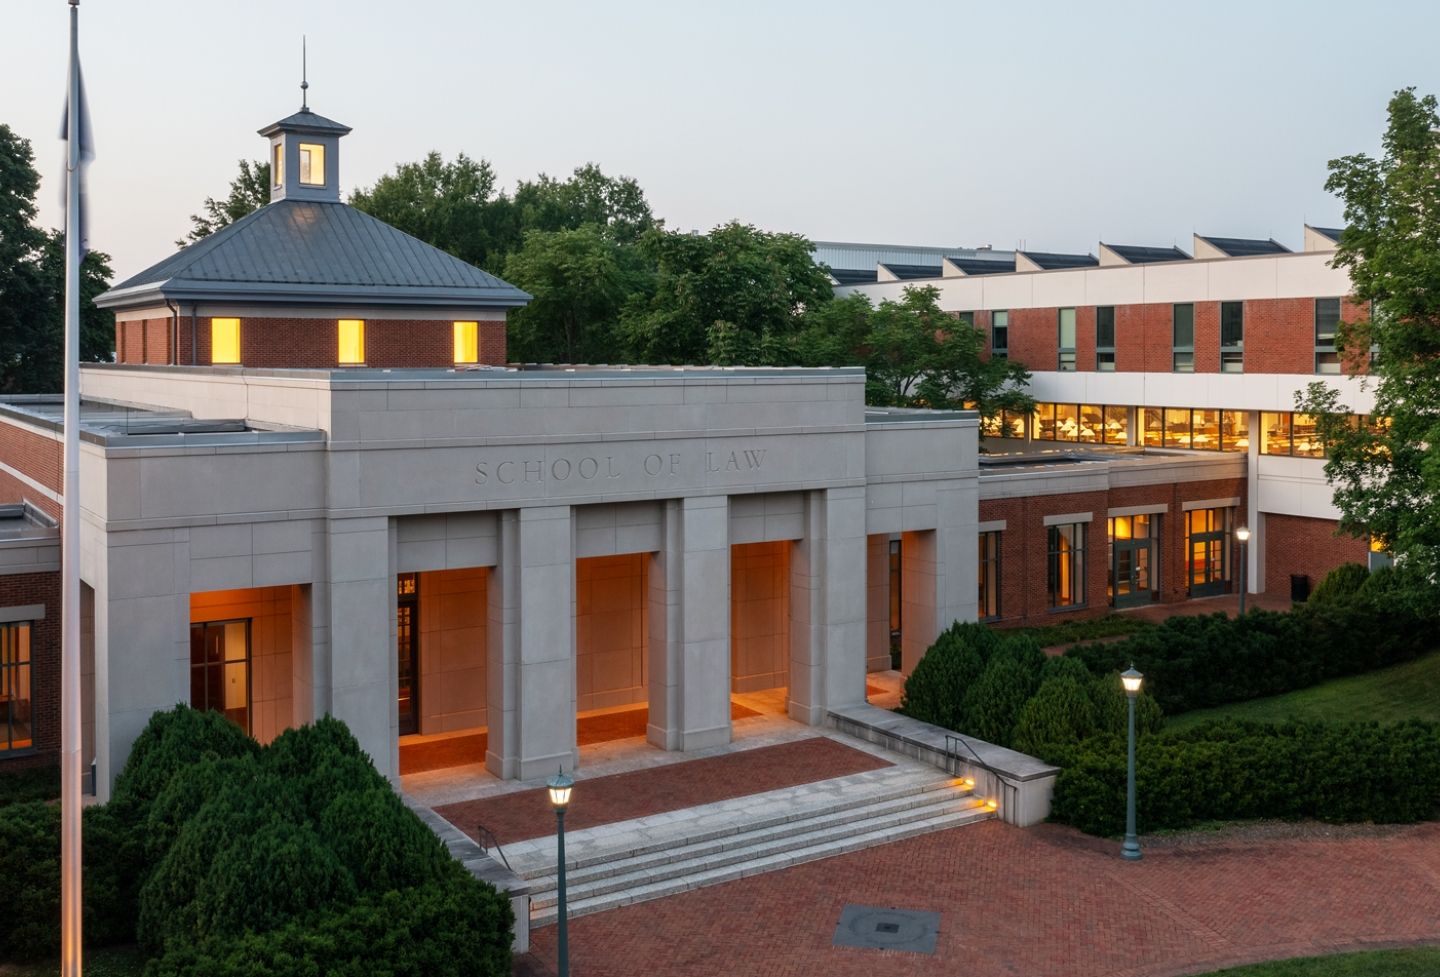 UVA Law School